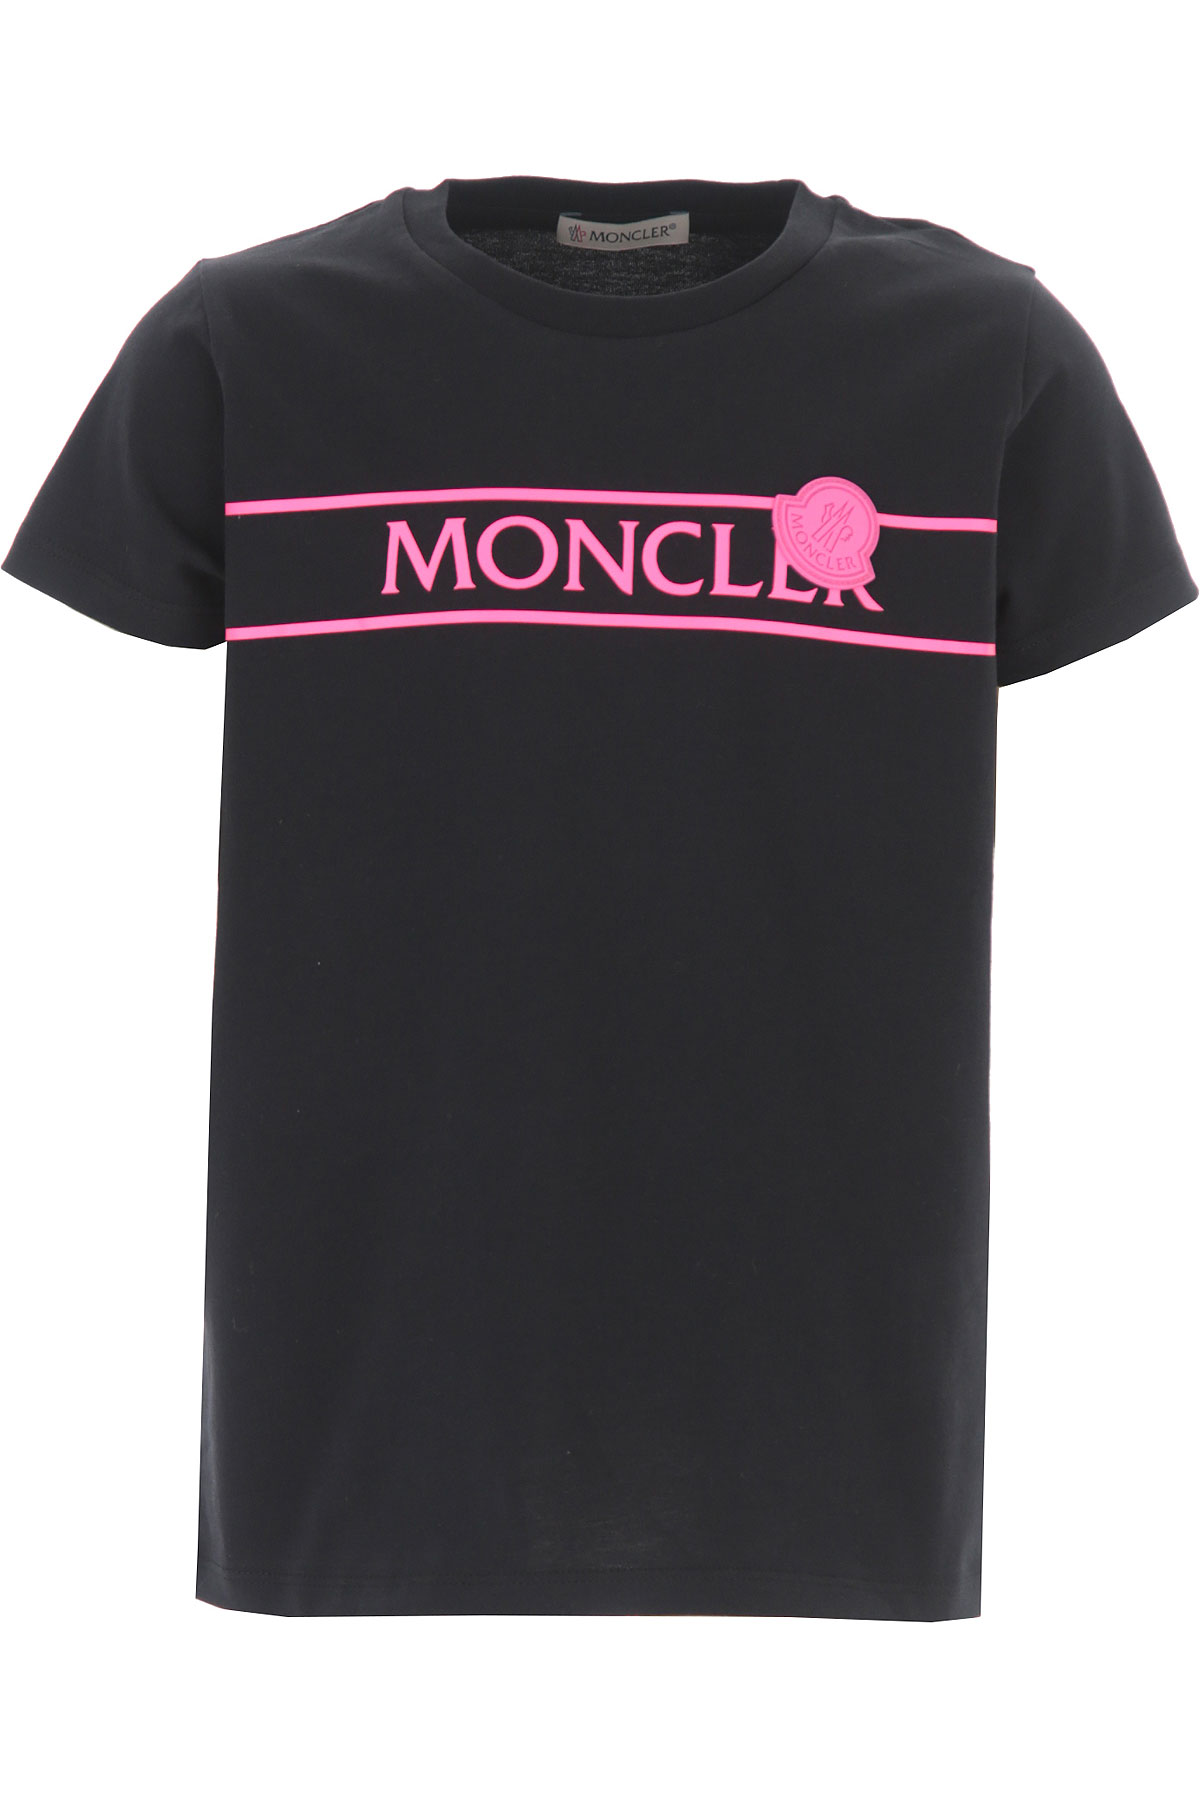 Girls Clothing Moncler, Style code: 8c74410-83907-999